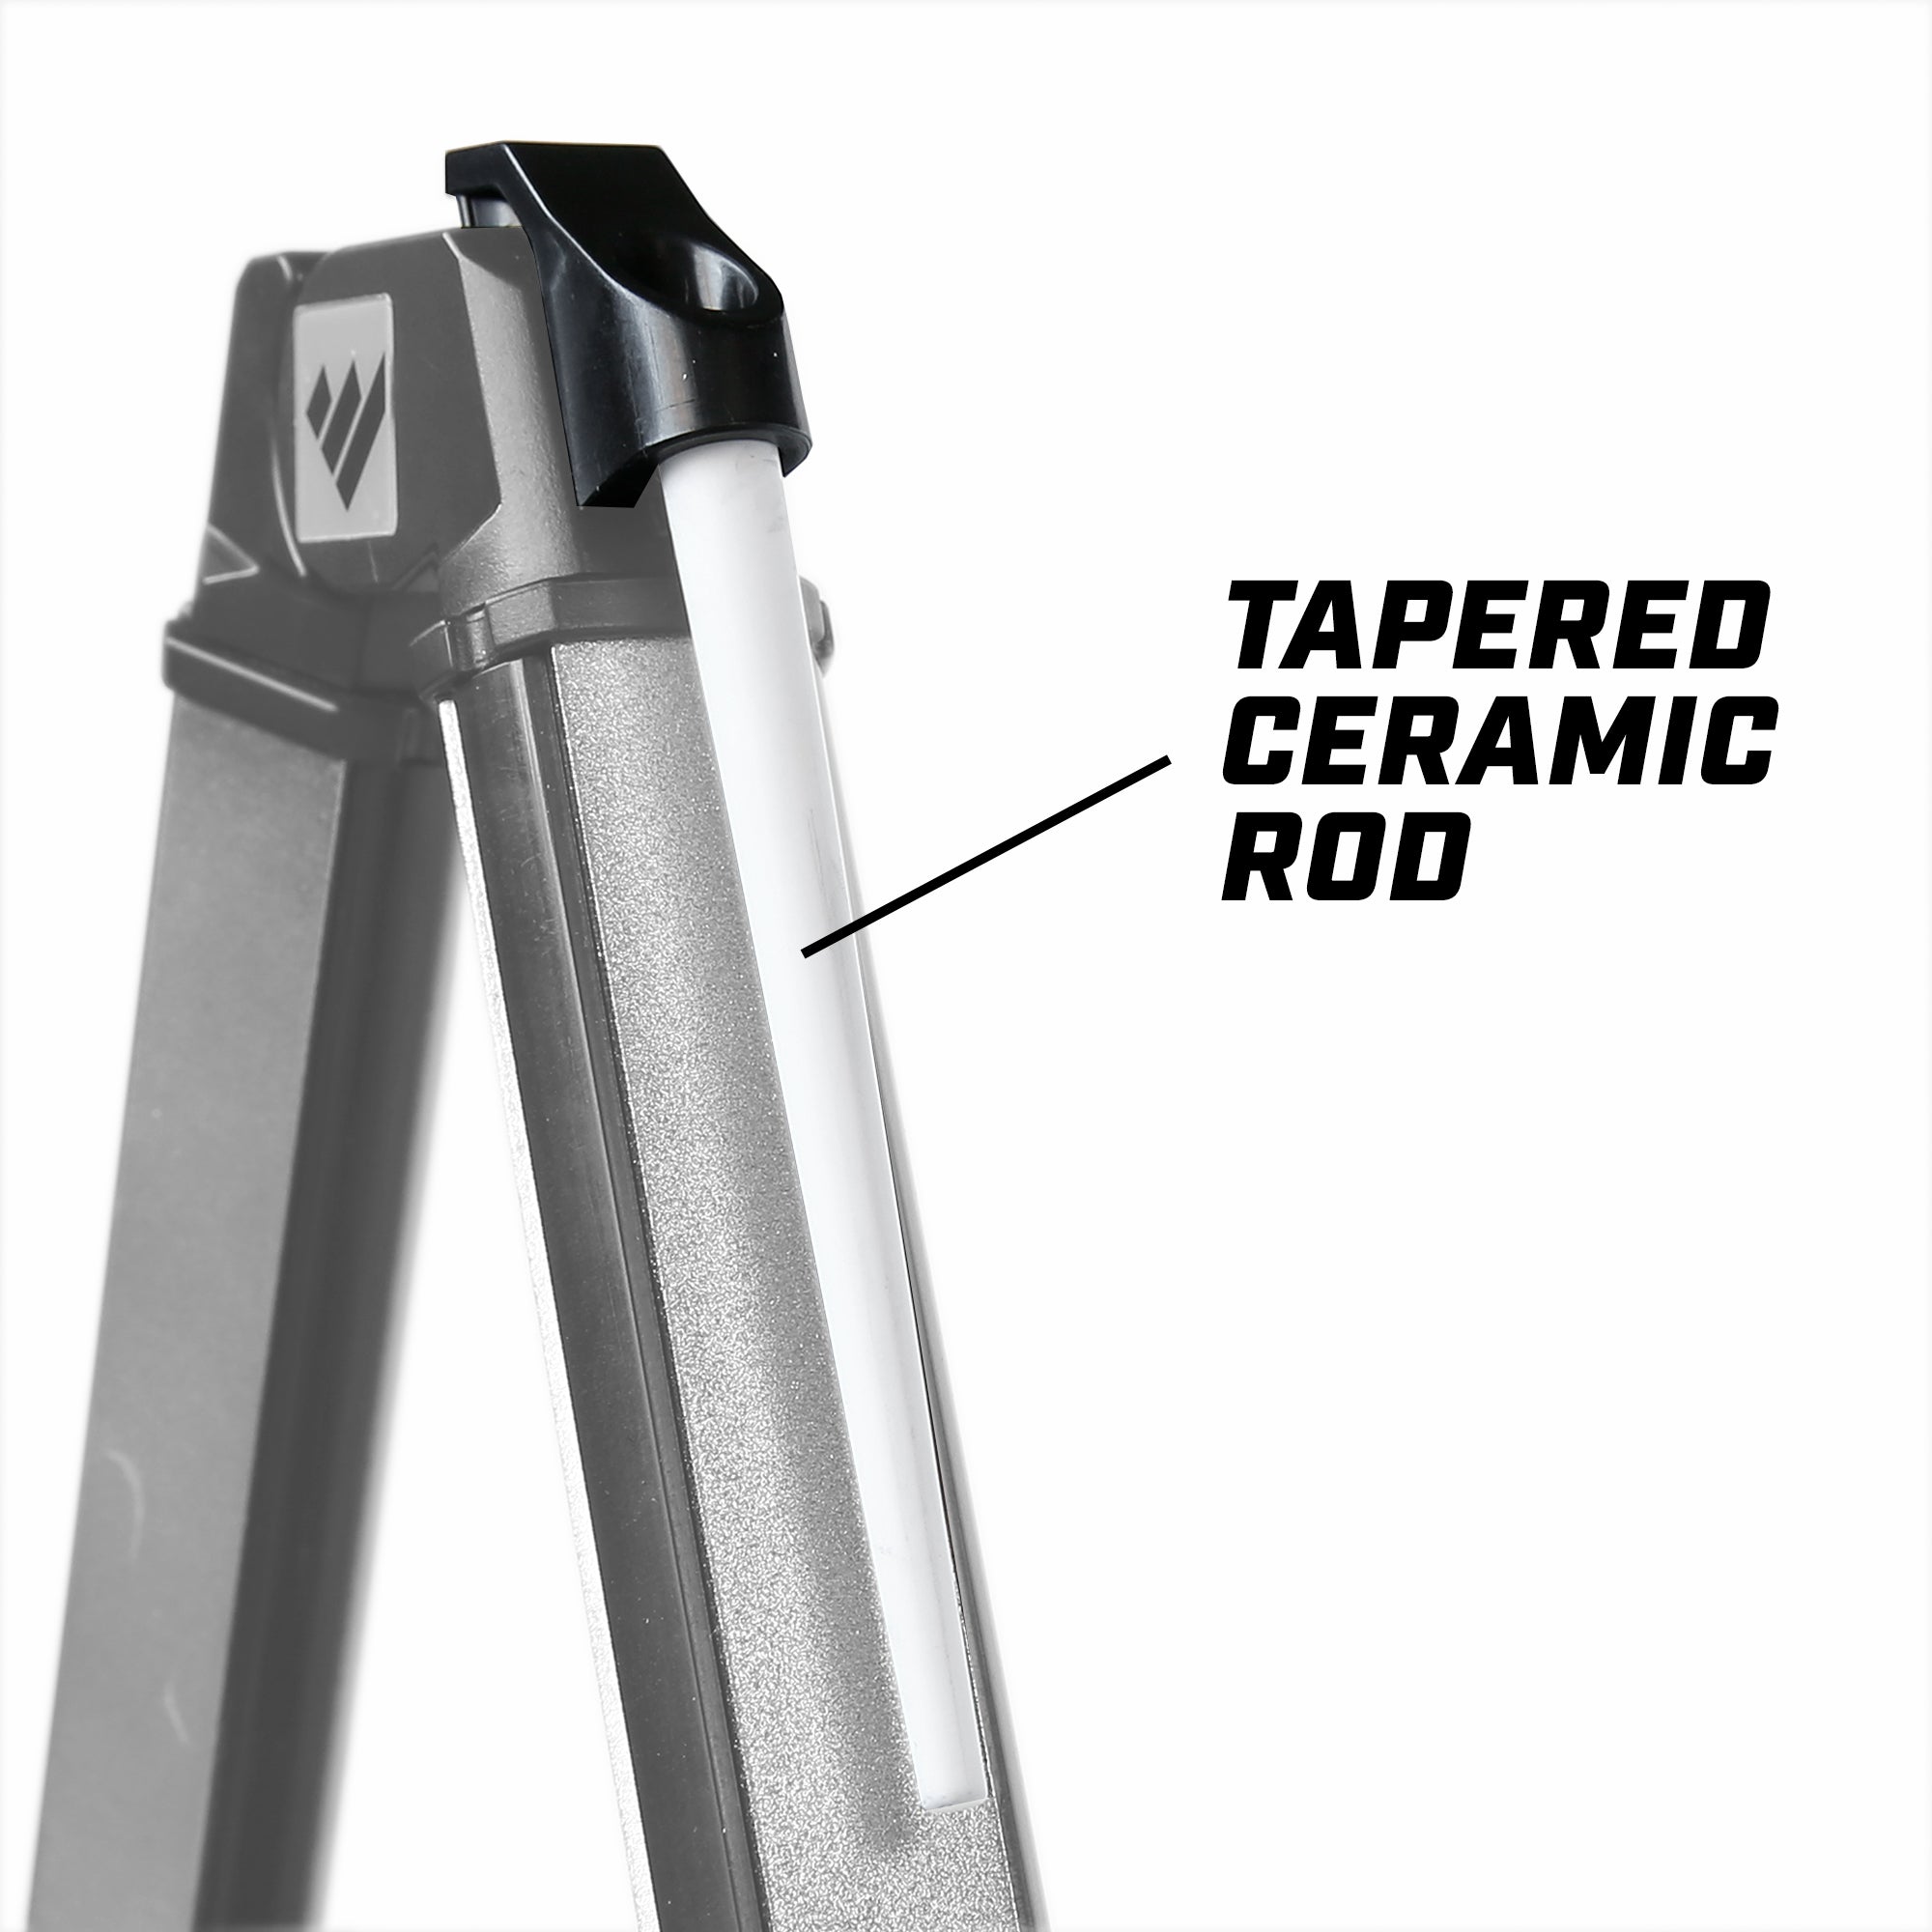 https://www.worksharptools.com/wp-content/uploads/2019/10/Tapered-Ceramic-Rod-Close-Up-2.jpg